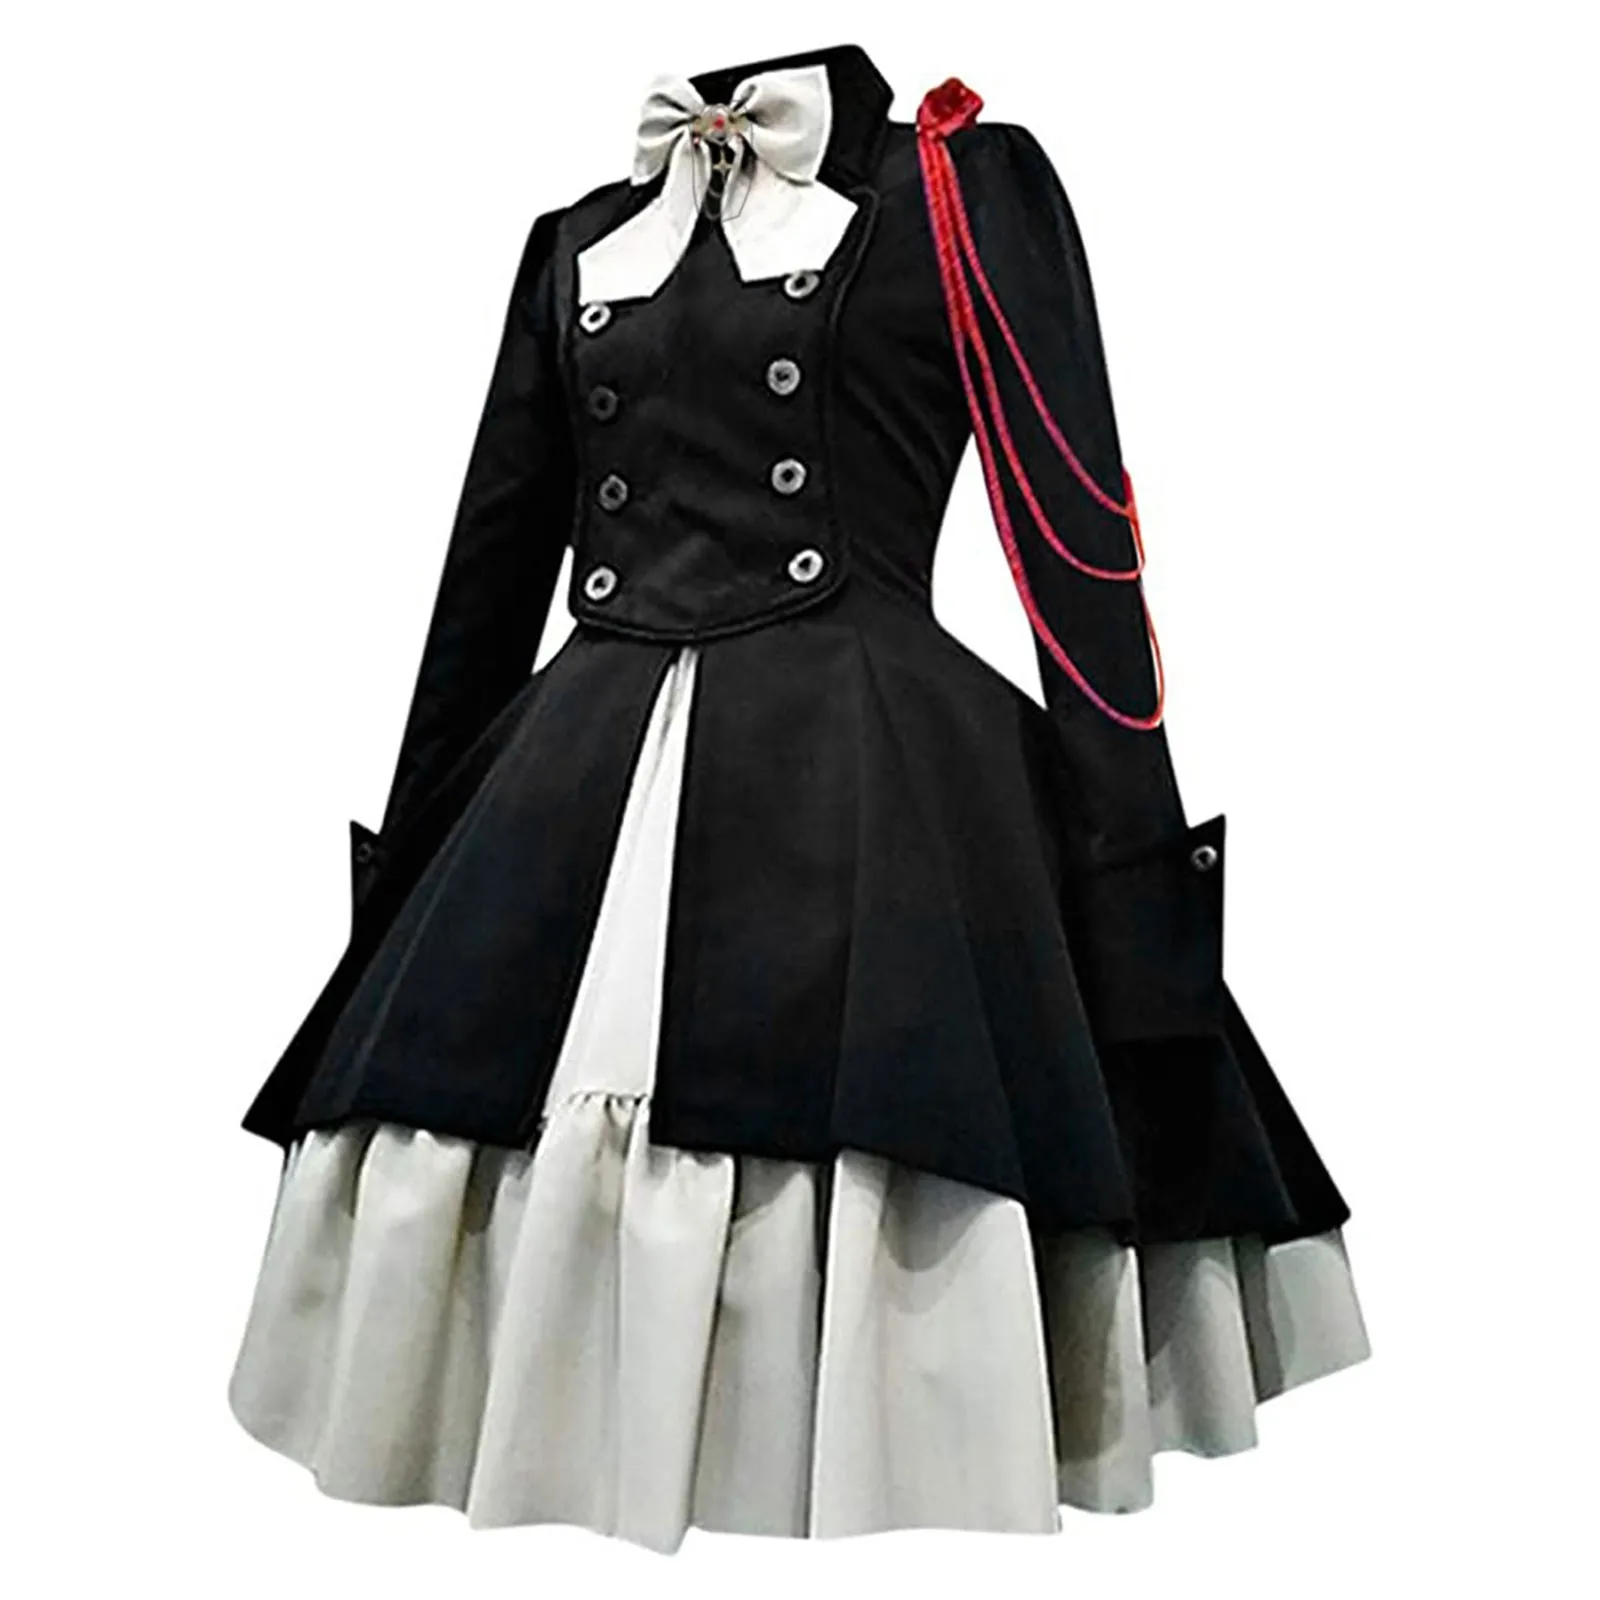 

Women's Court Style Renaissance Vintage Elegant Bow Neck Long Sleeve Ruffled Lace Cosplay Dress Gothic Lolita Party Dresses